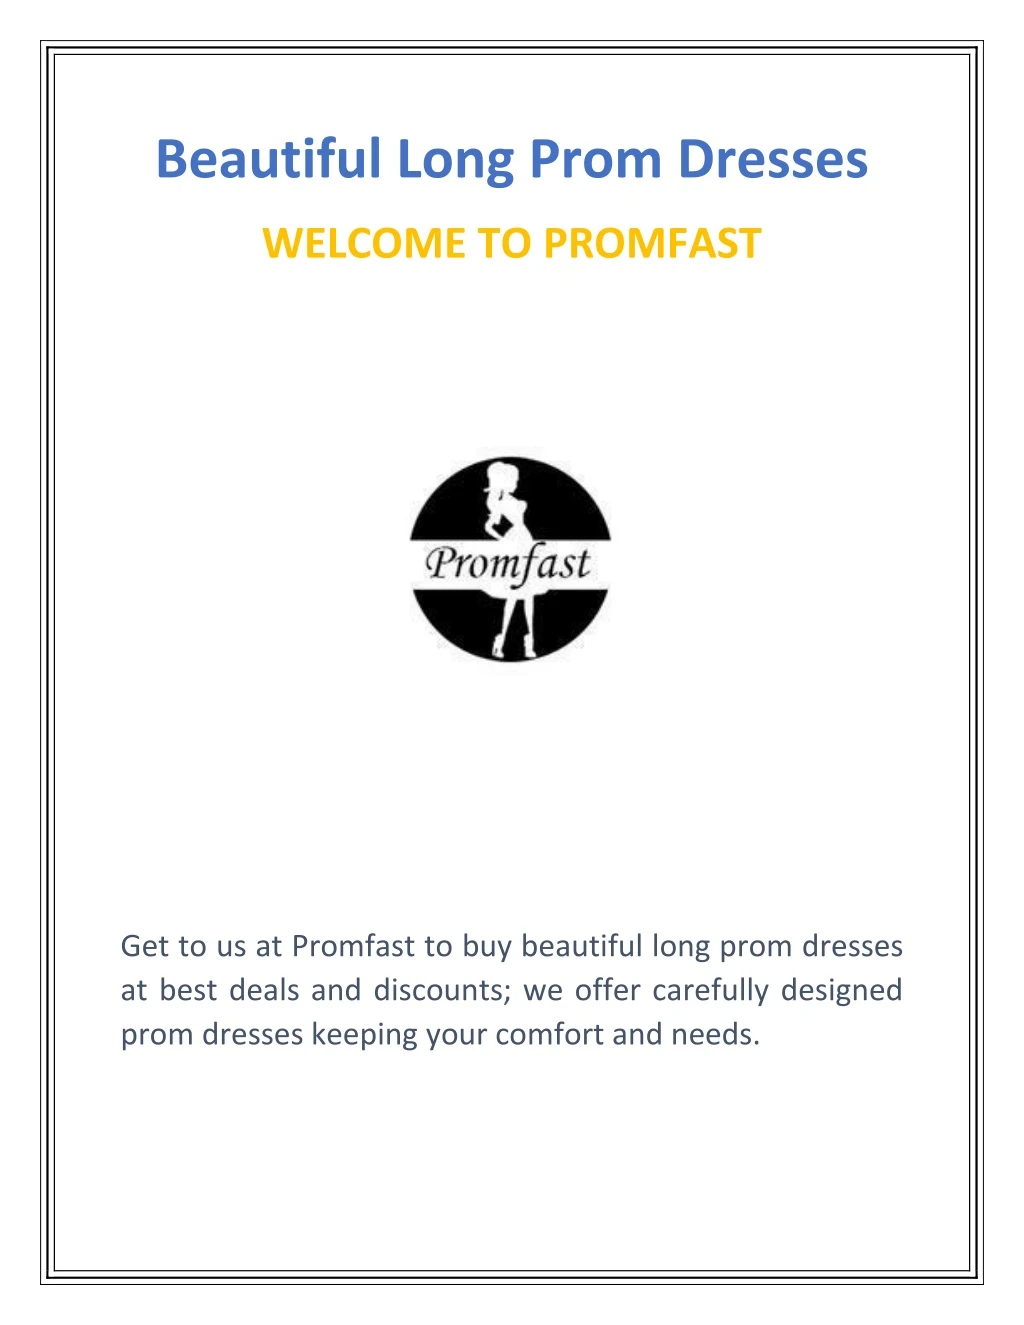 beautiful long prom dresses